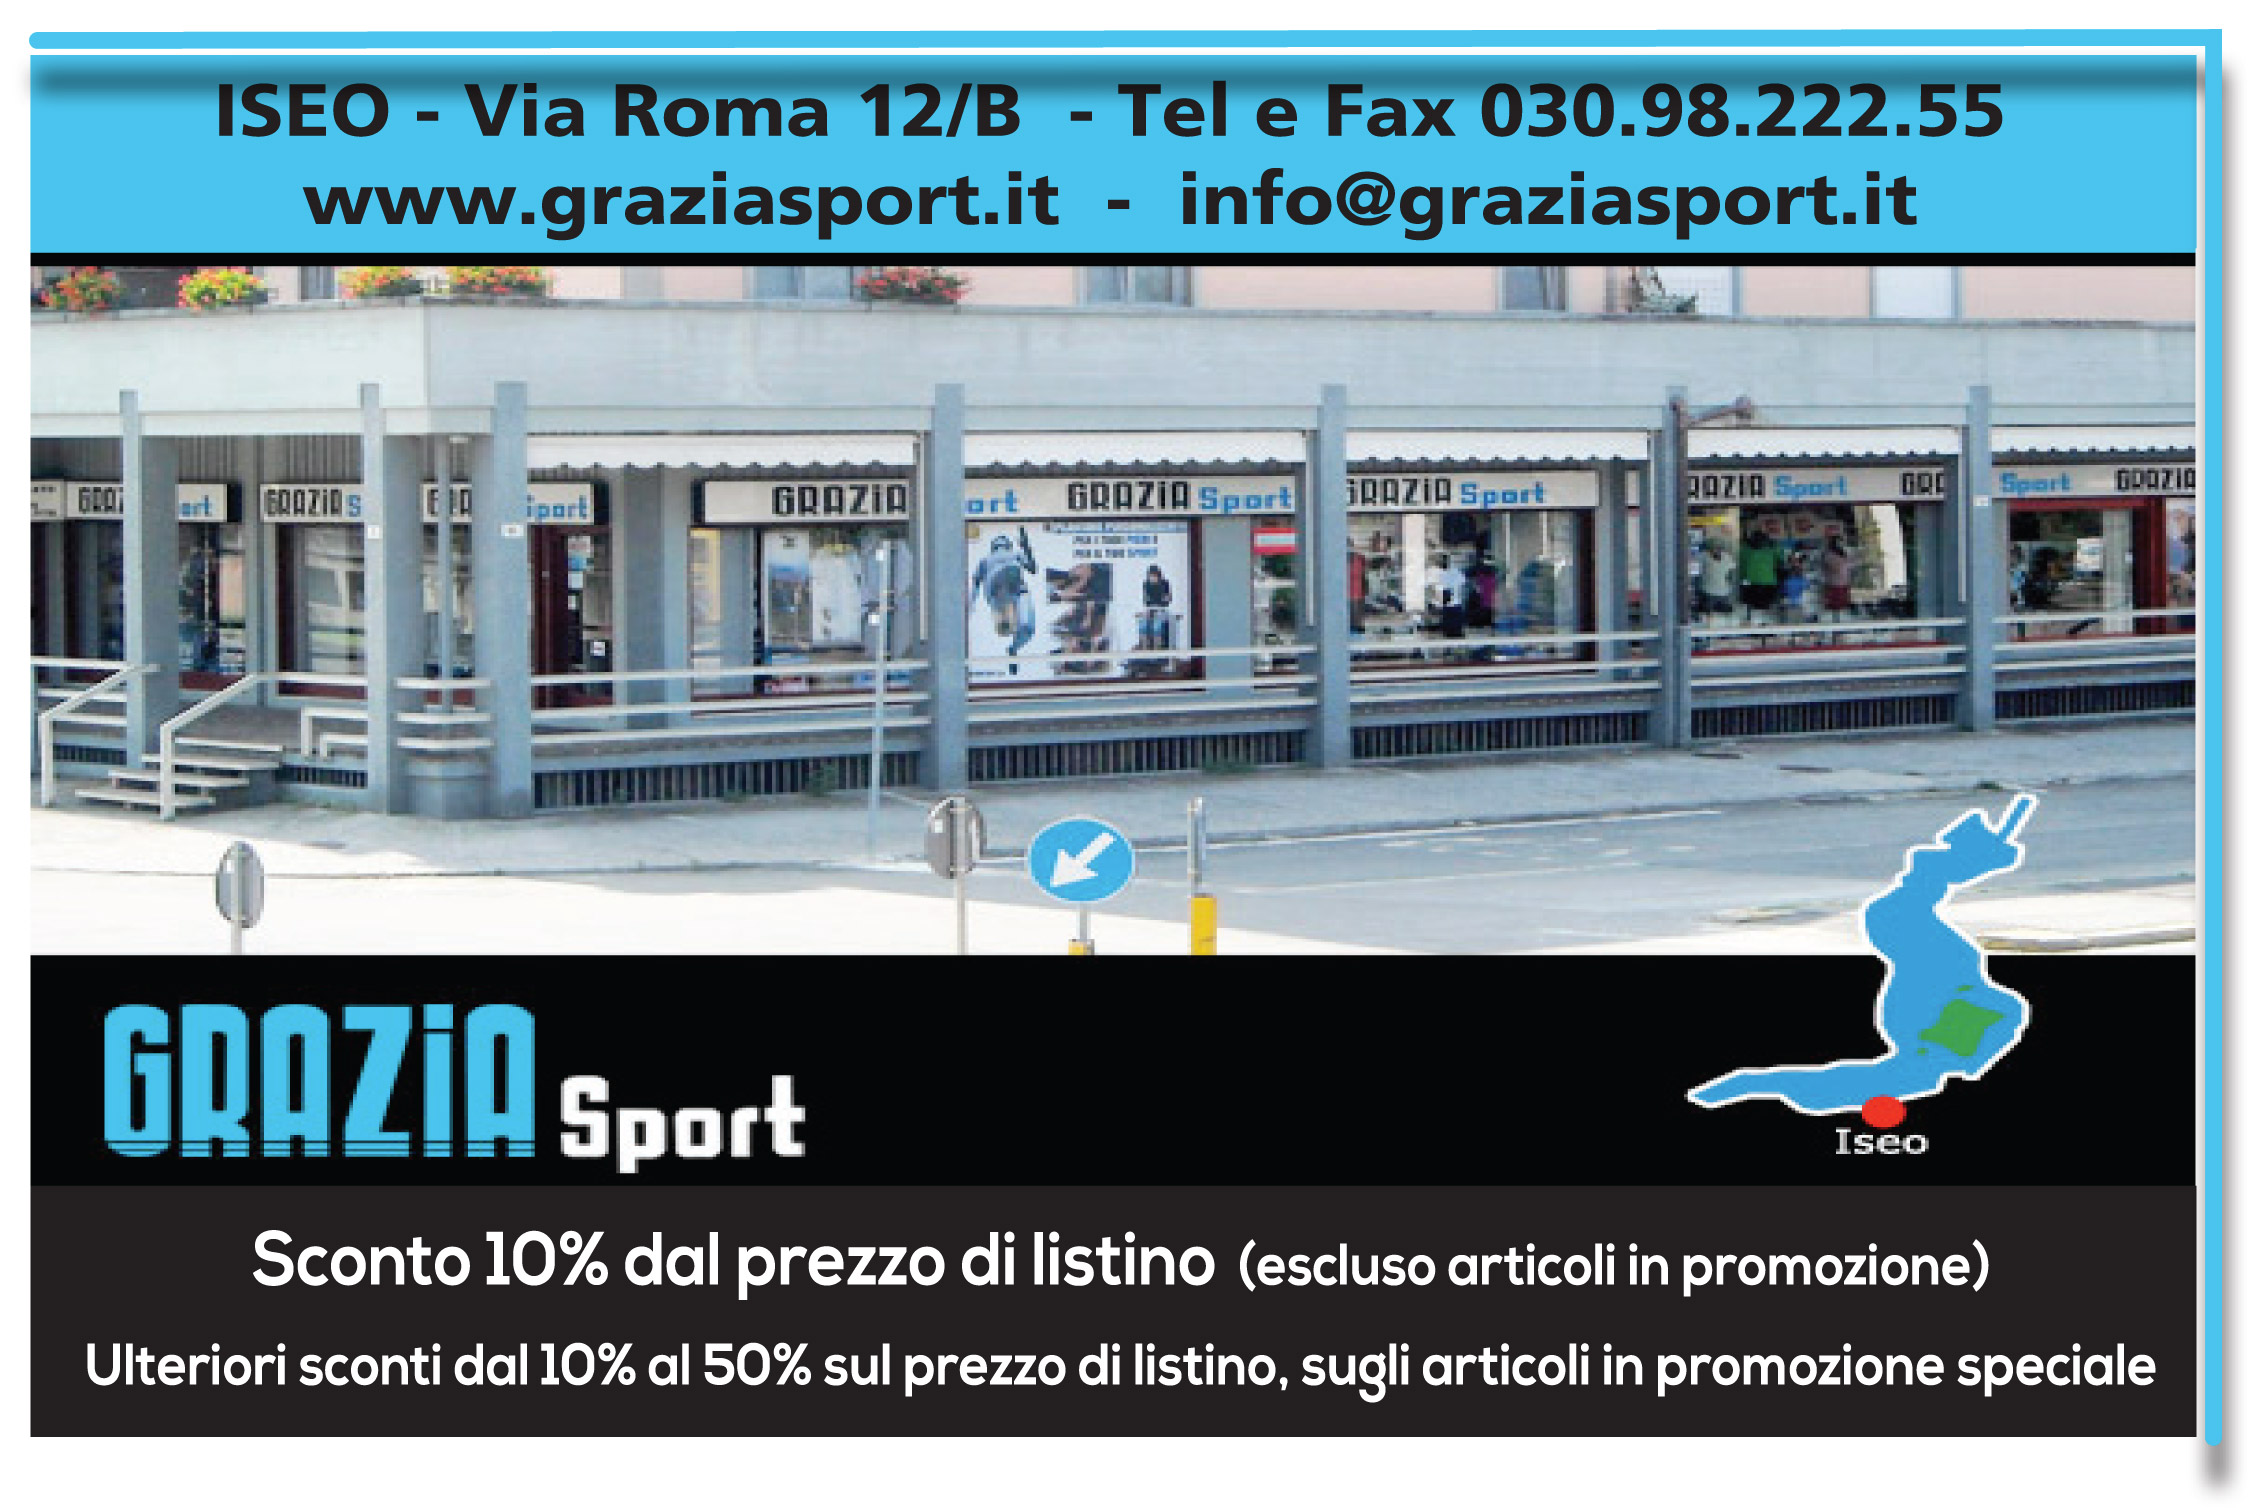 Grazia Sport - FIE Italia